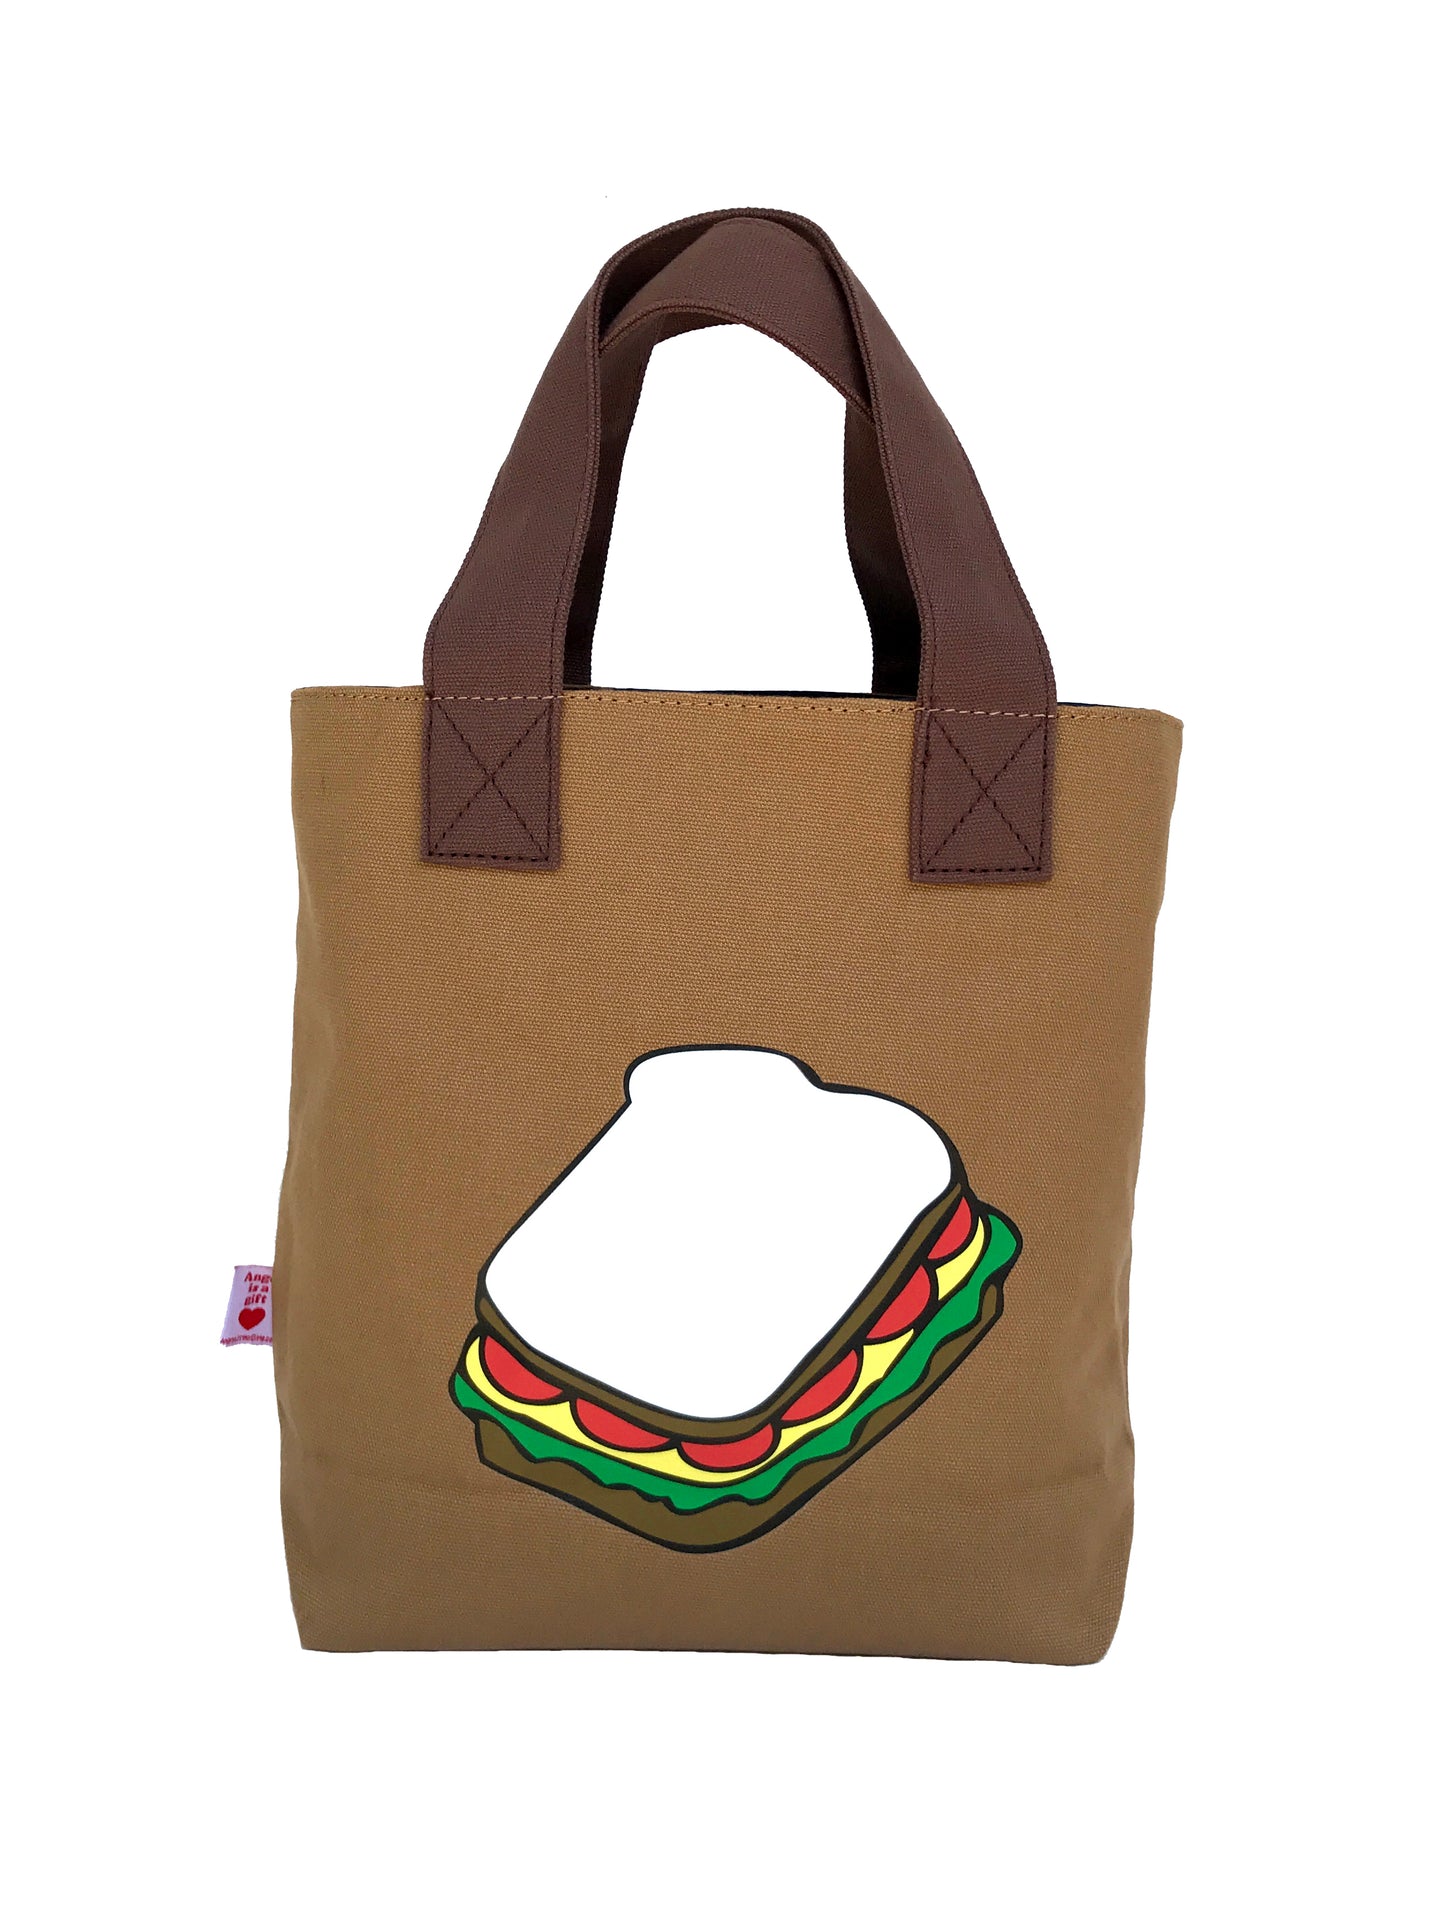 Lunch Bag: Make Your Own Damn Sandwich!